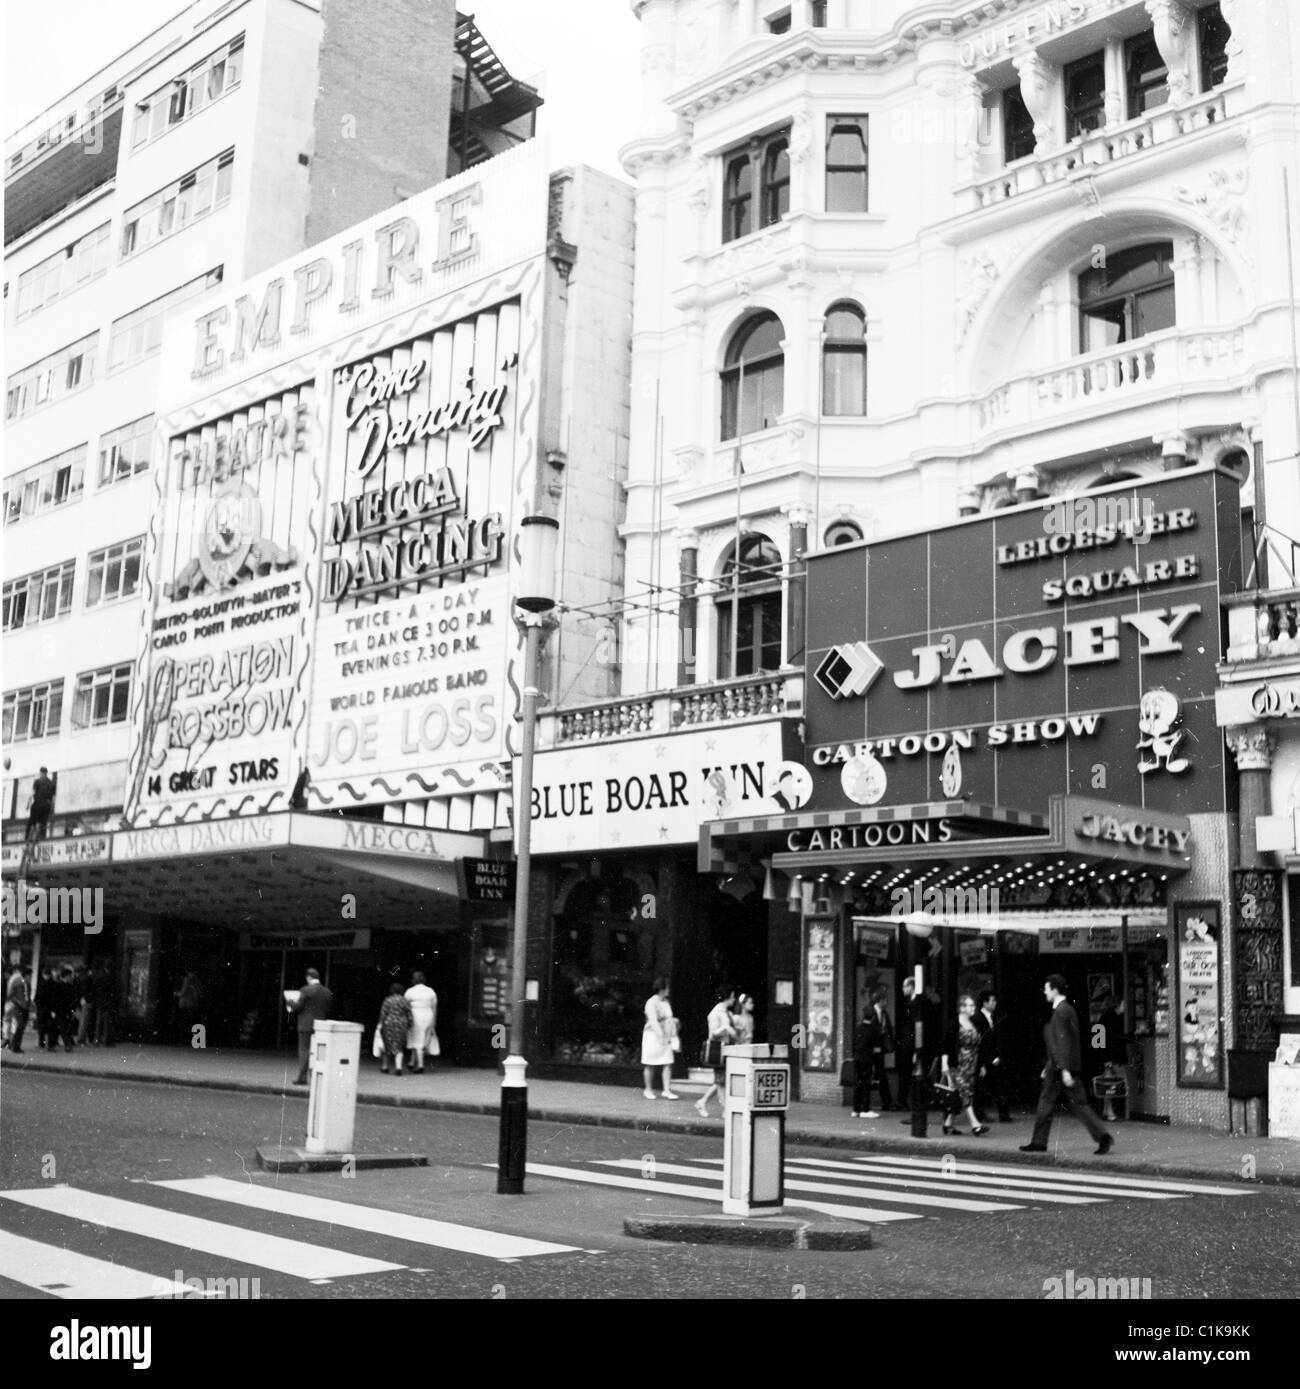 1965. Historisches Bild, dem berühmten Empire Theatre, Leicester Square, London, mit Mekka Tanzen, Joe Verlust big band & MGM film Operation Crossbow. Stockfoto